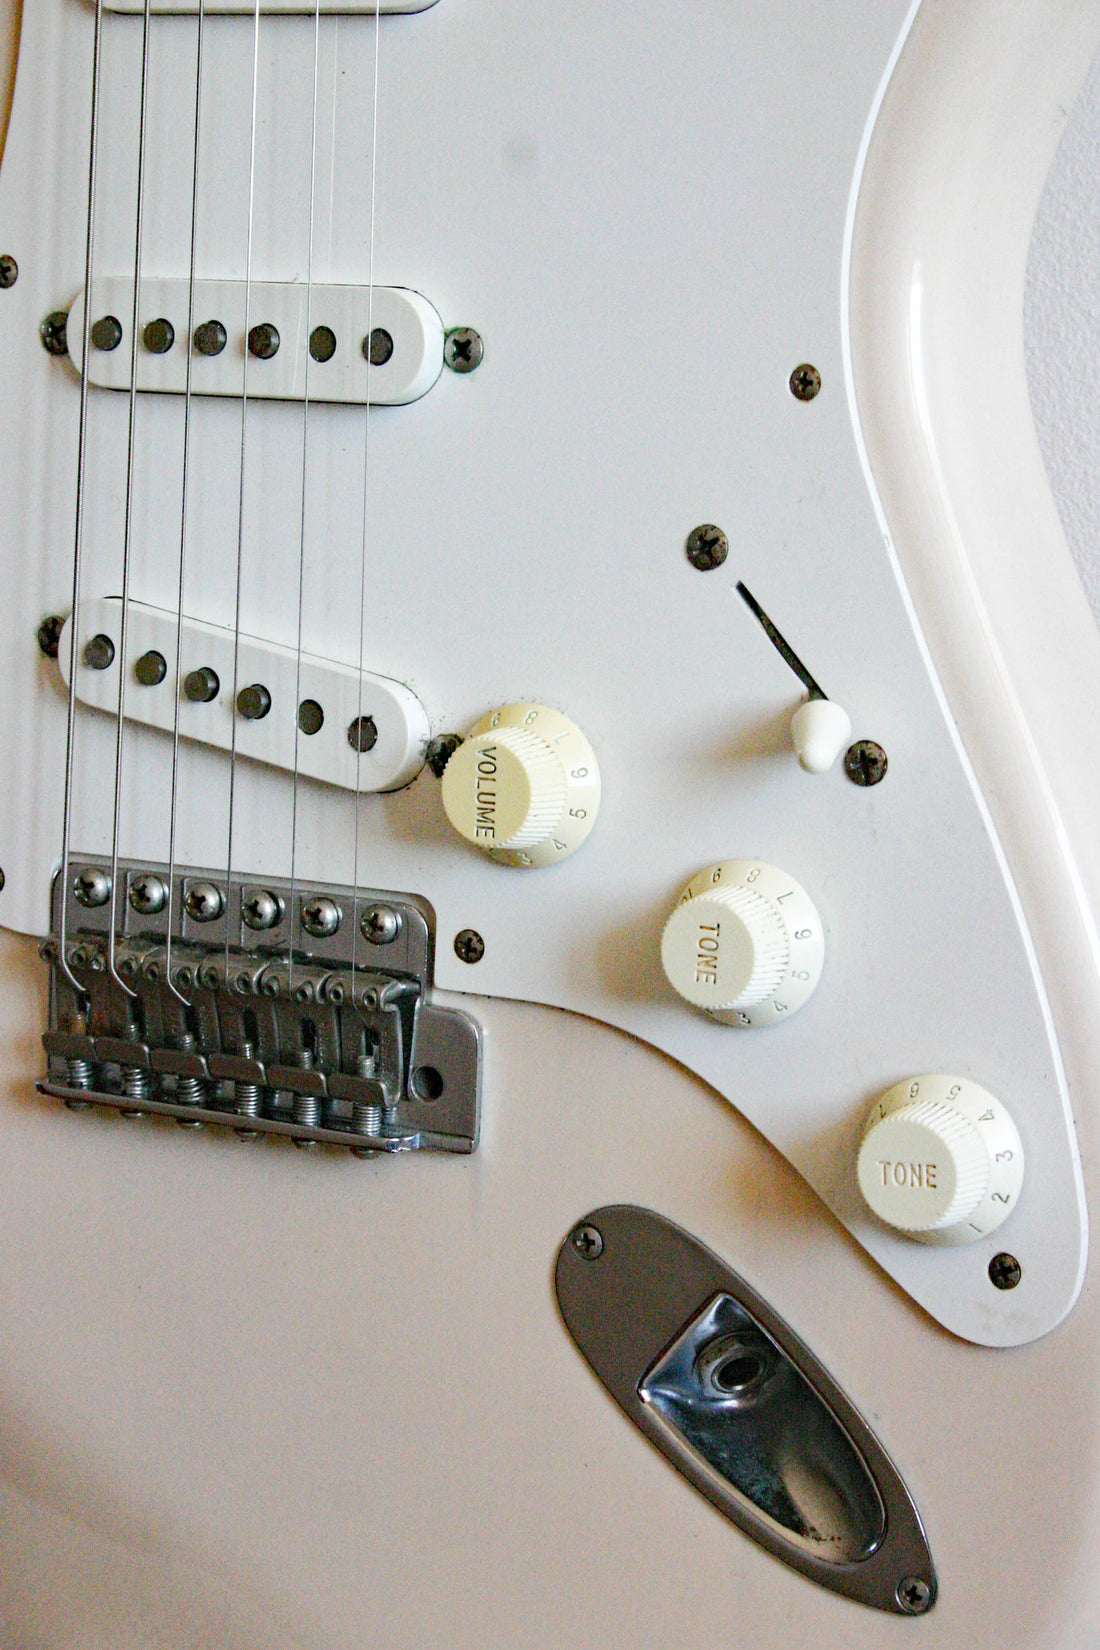 Used Fender Stratocaster '57 Reissue US Blonde 1997-00